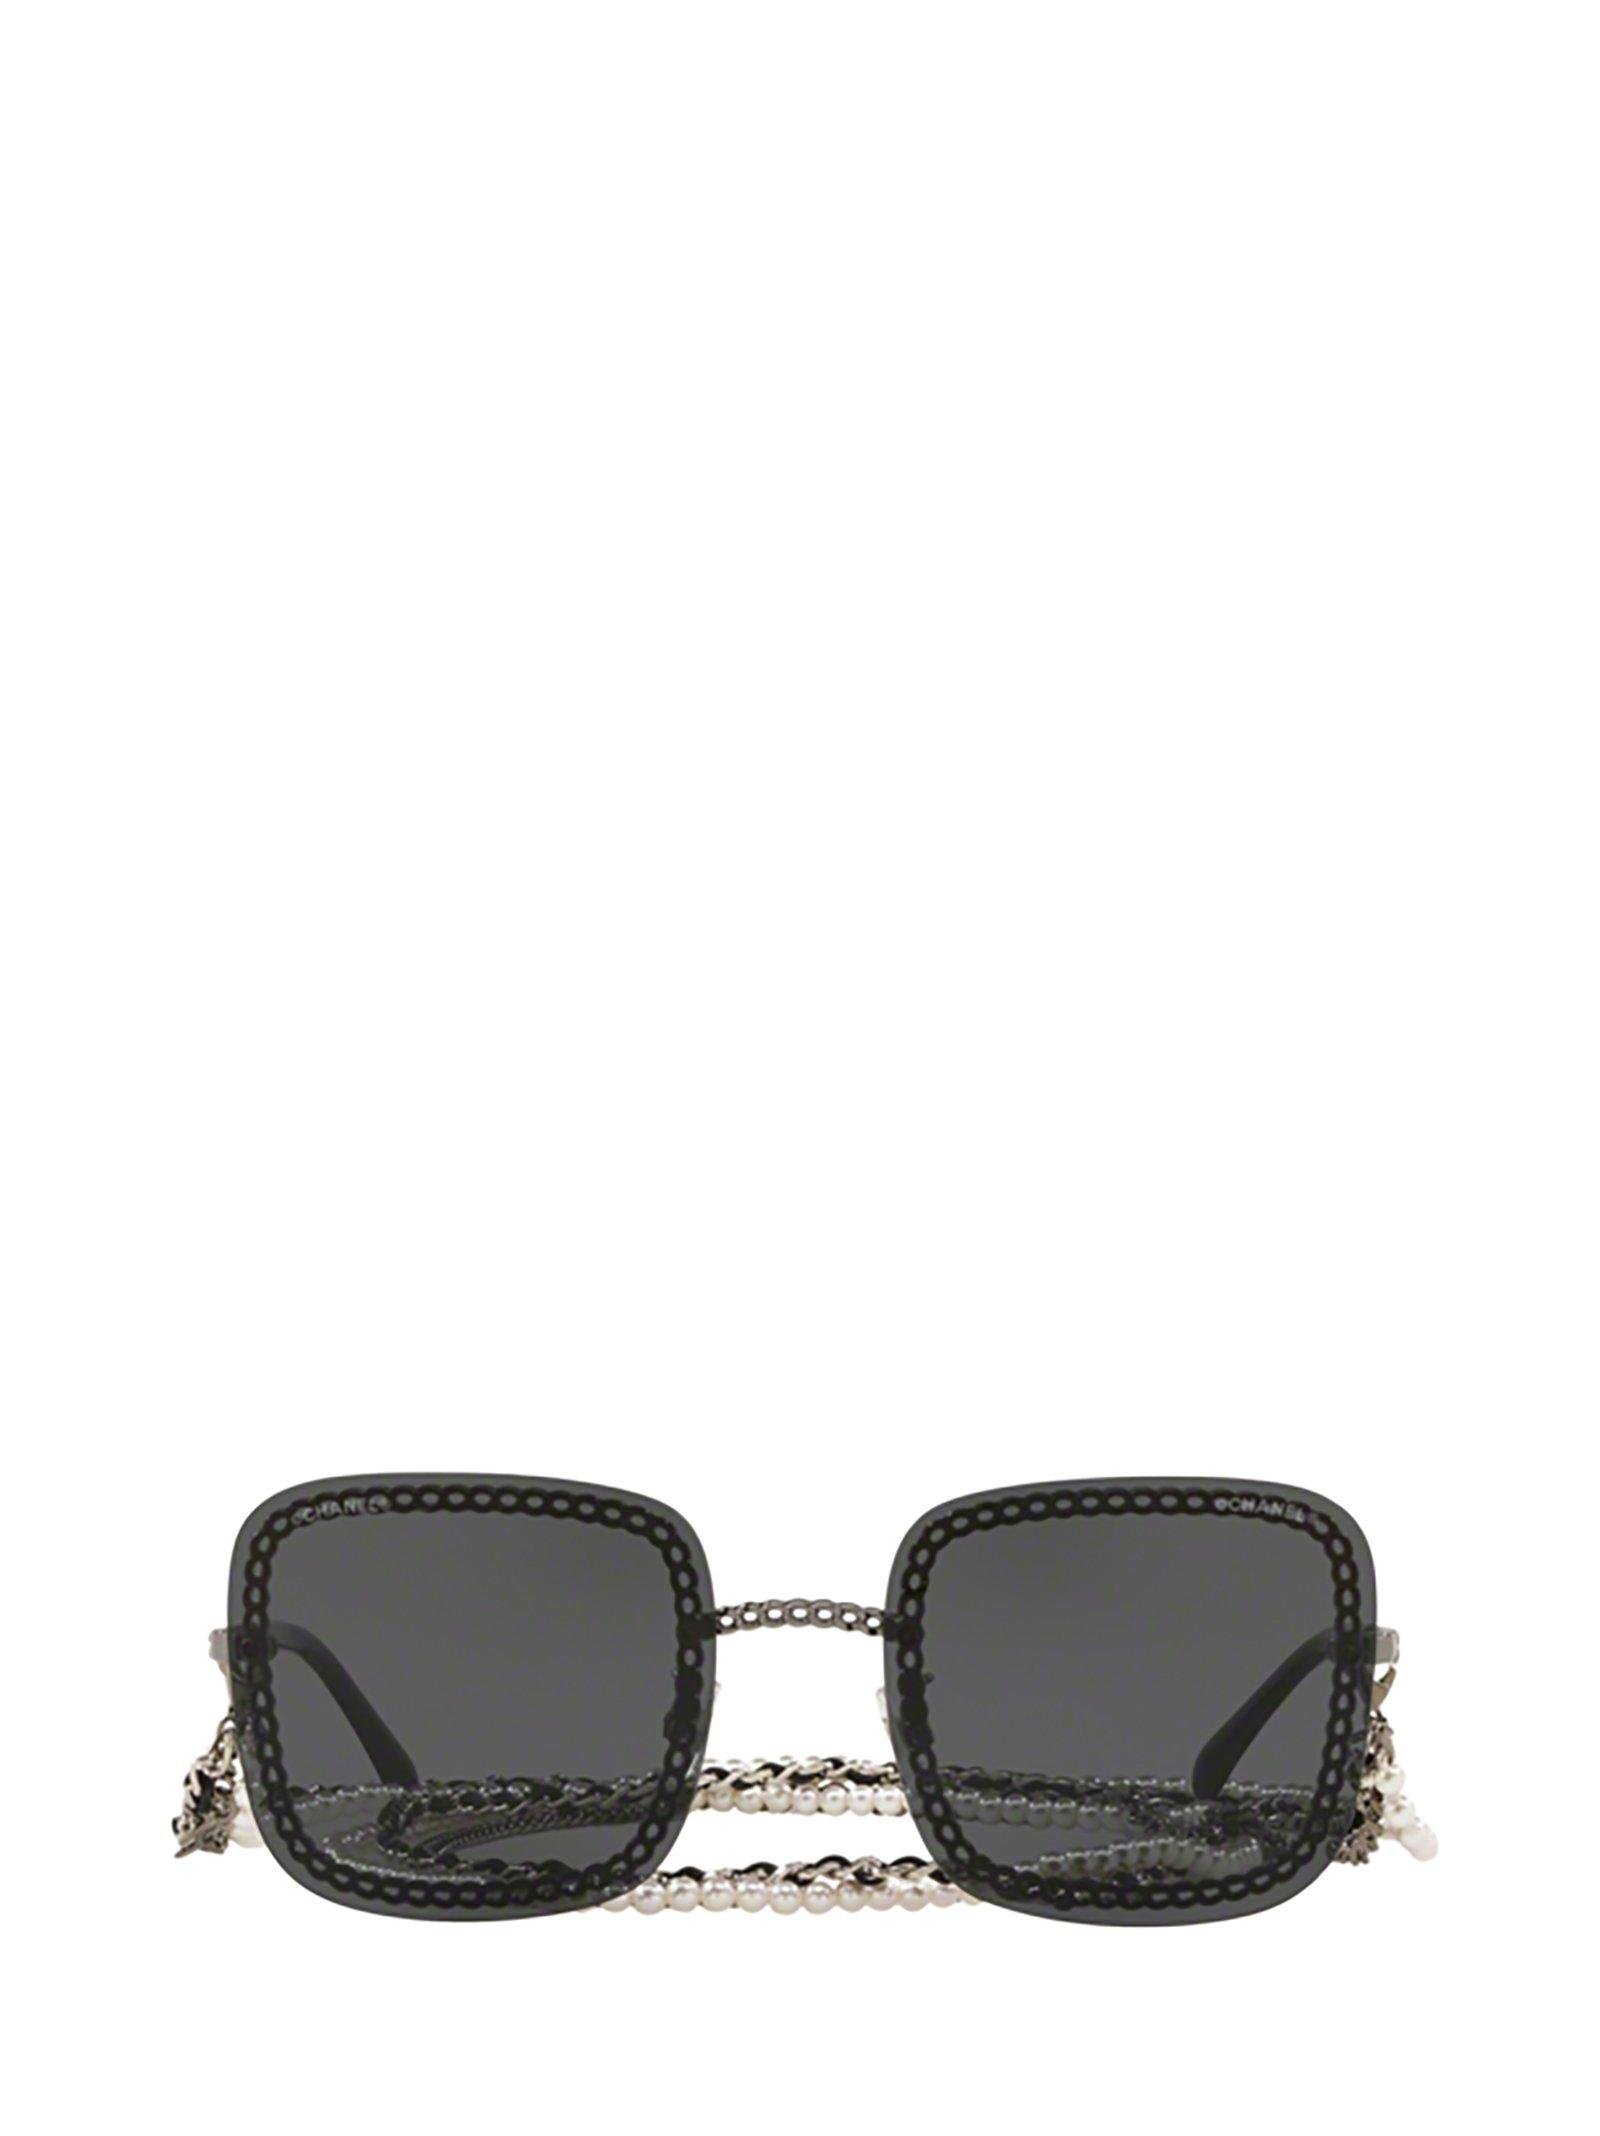 CHANEL, Accessories, Chanel Rectangle Sunglasses